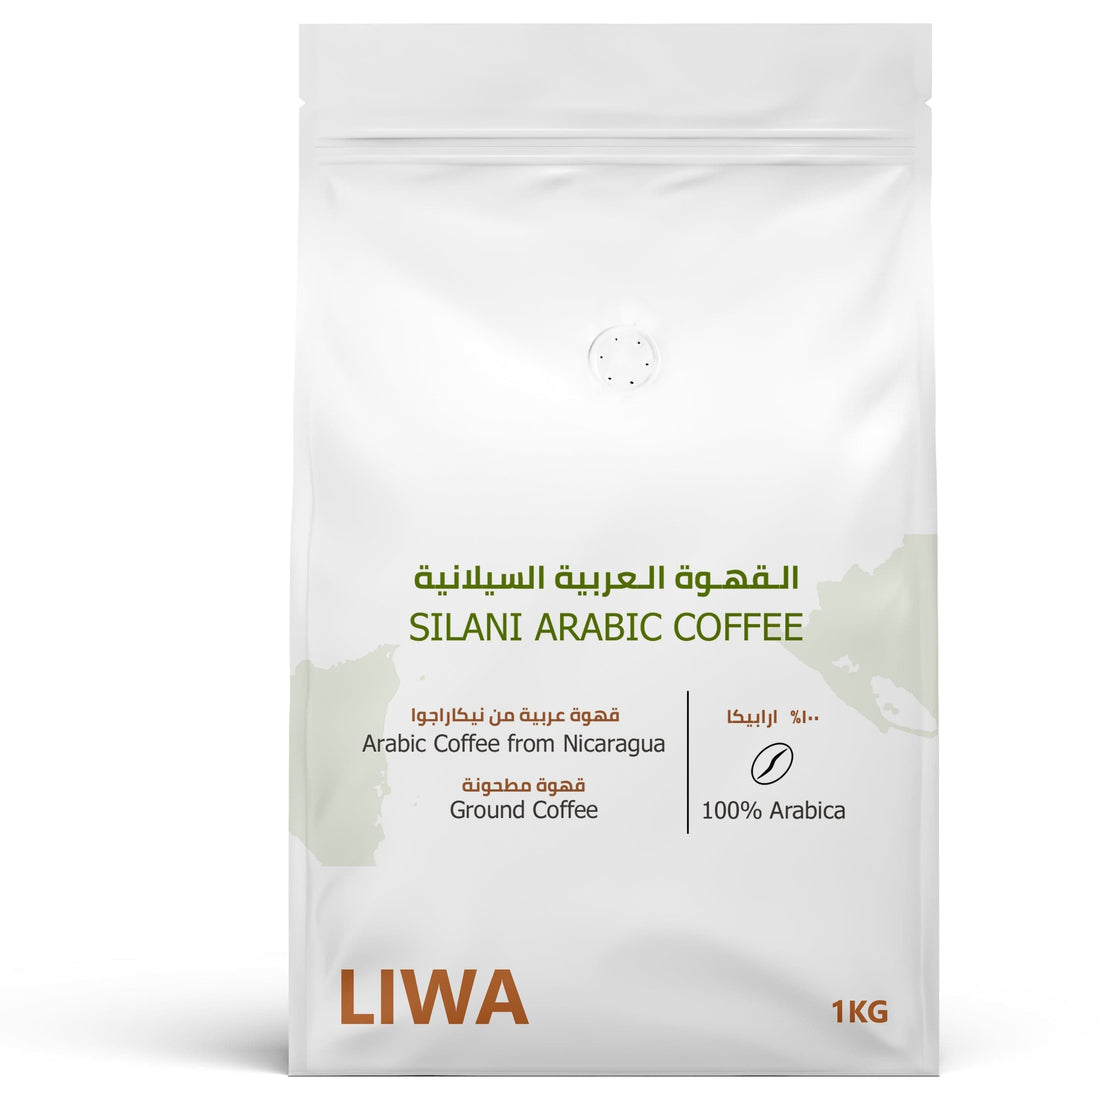 Silani Arabic Coffee (Nicaragua) 5kg & 10kg